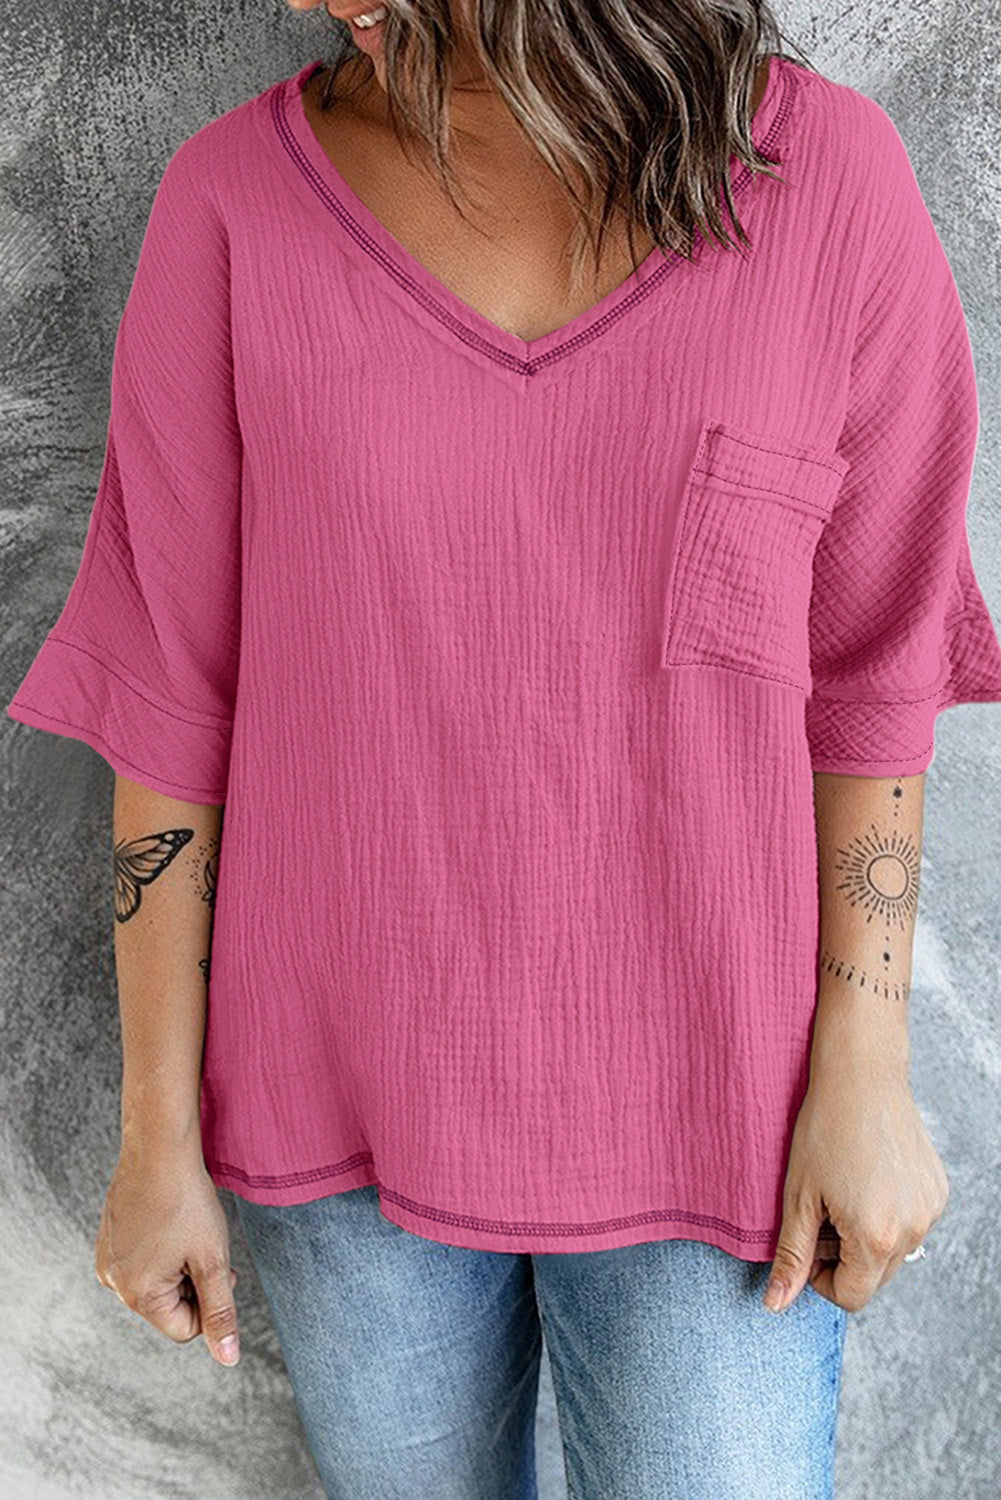 LC25112185-1010-S, LC25112185-1010-M, LC25112185-1010-L, LC25112185-1010-XL, LC25112185-1010-2XL, Pink Women's Casual Short Sleeve T Shirts V Neck Chest Pocket Knit Blouse Top